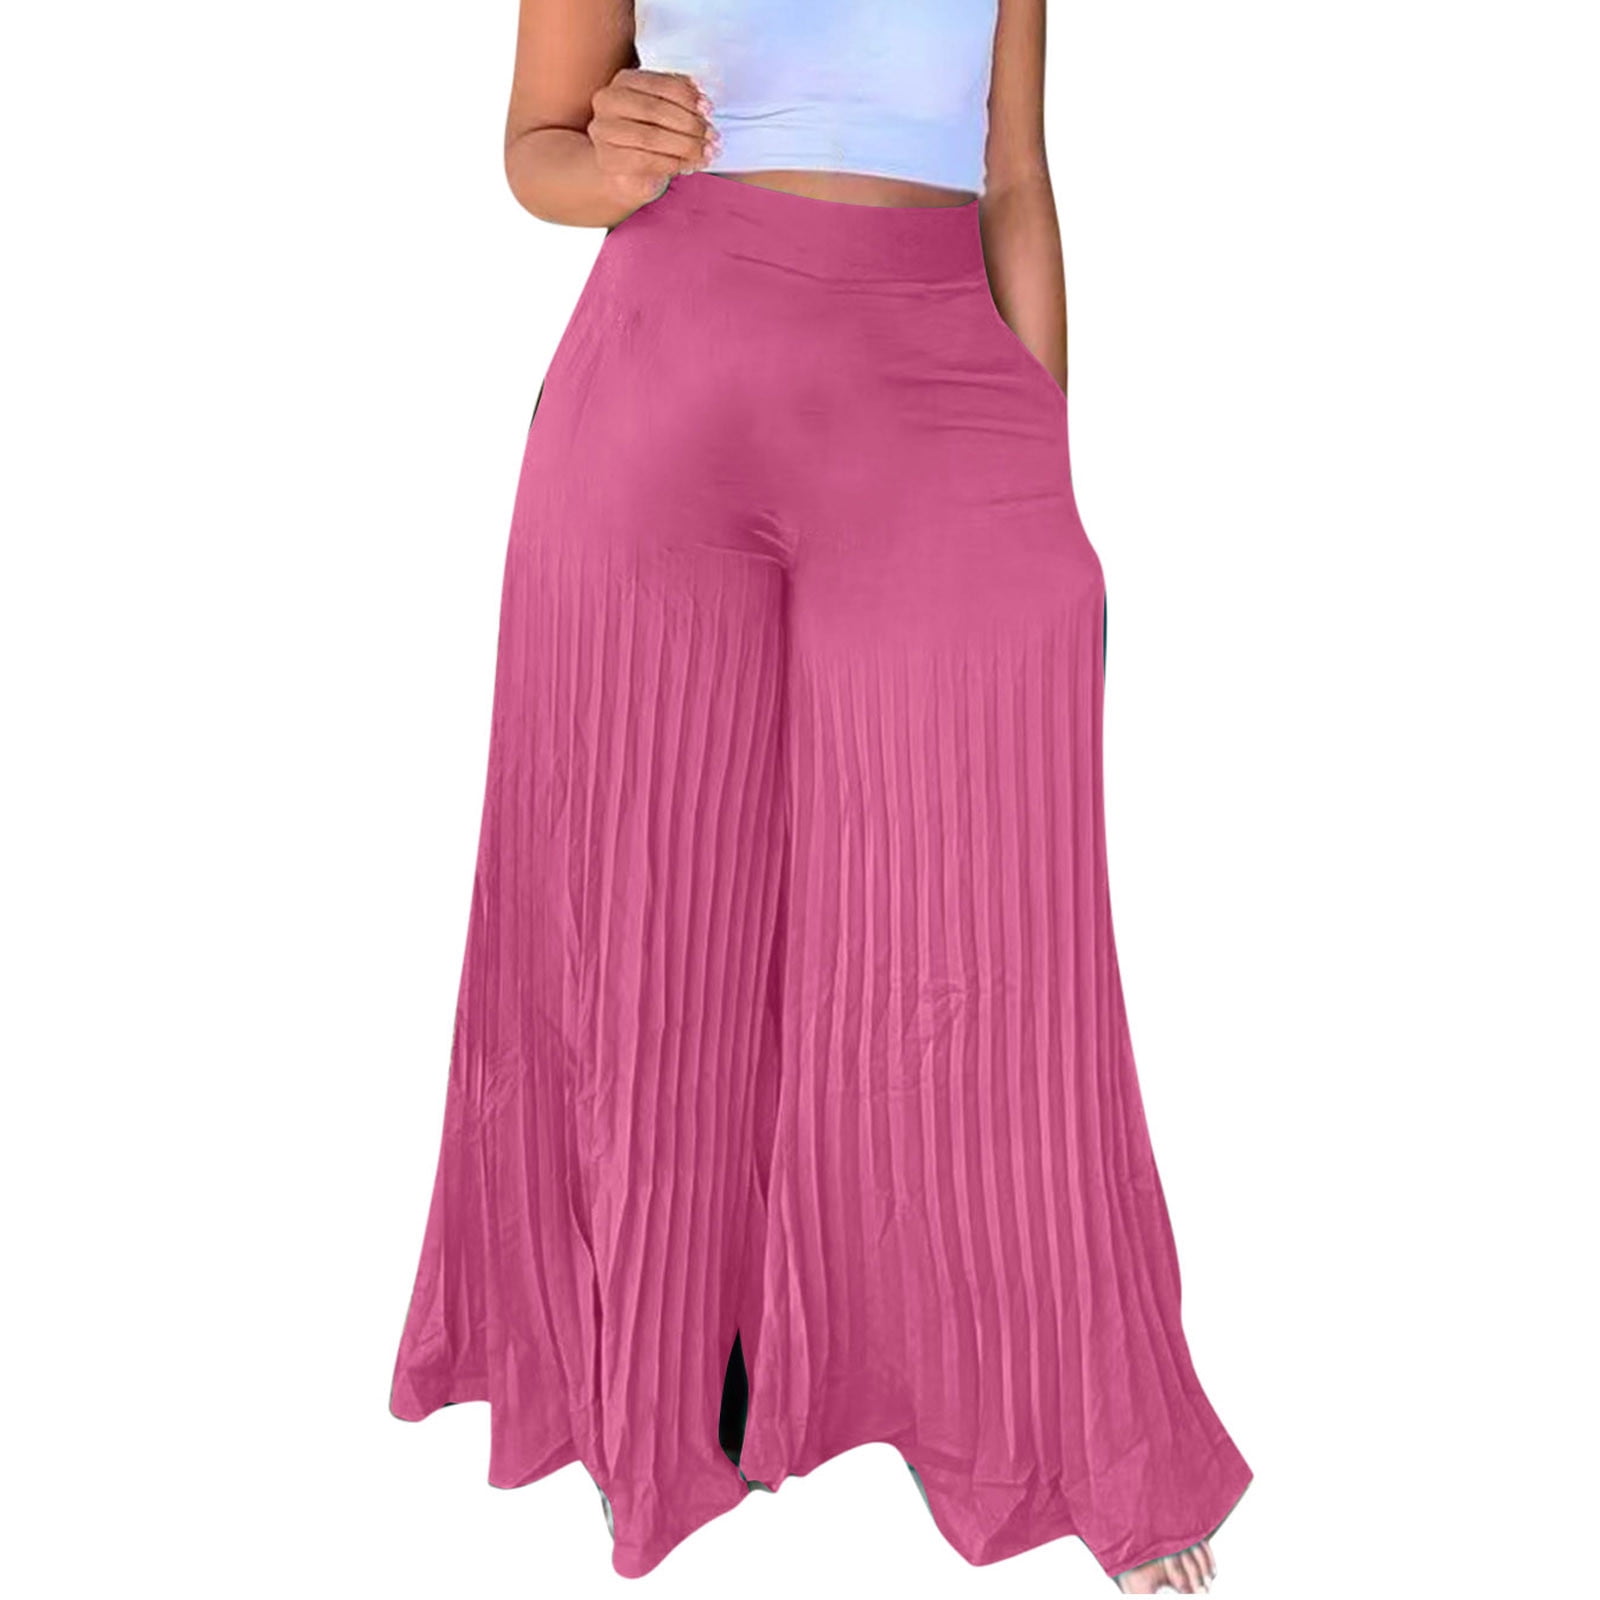 Zodggu Womens Fashion Summer Casual Solid Chiffon Pockets Elastic